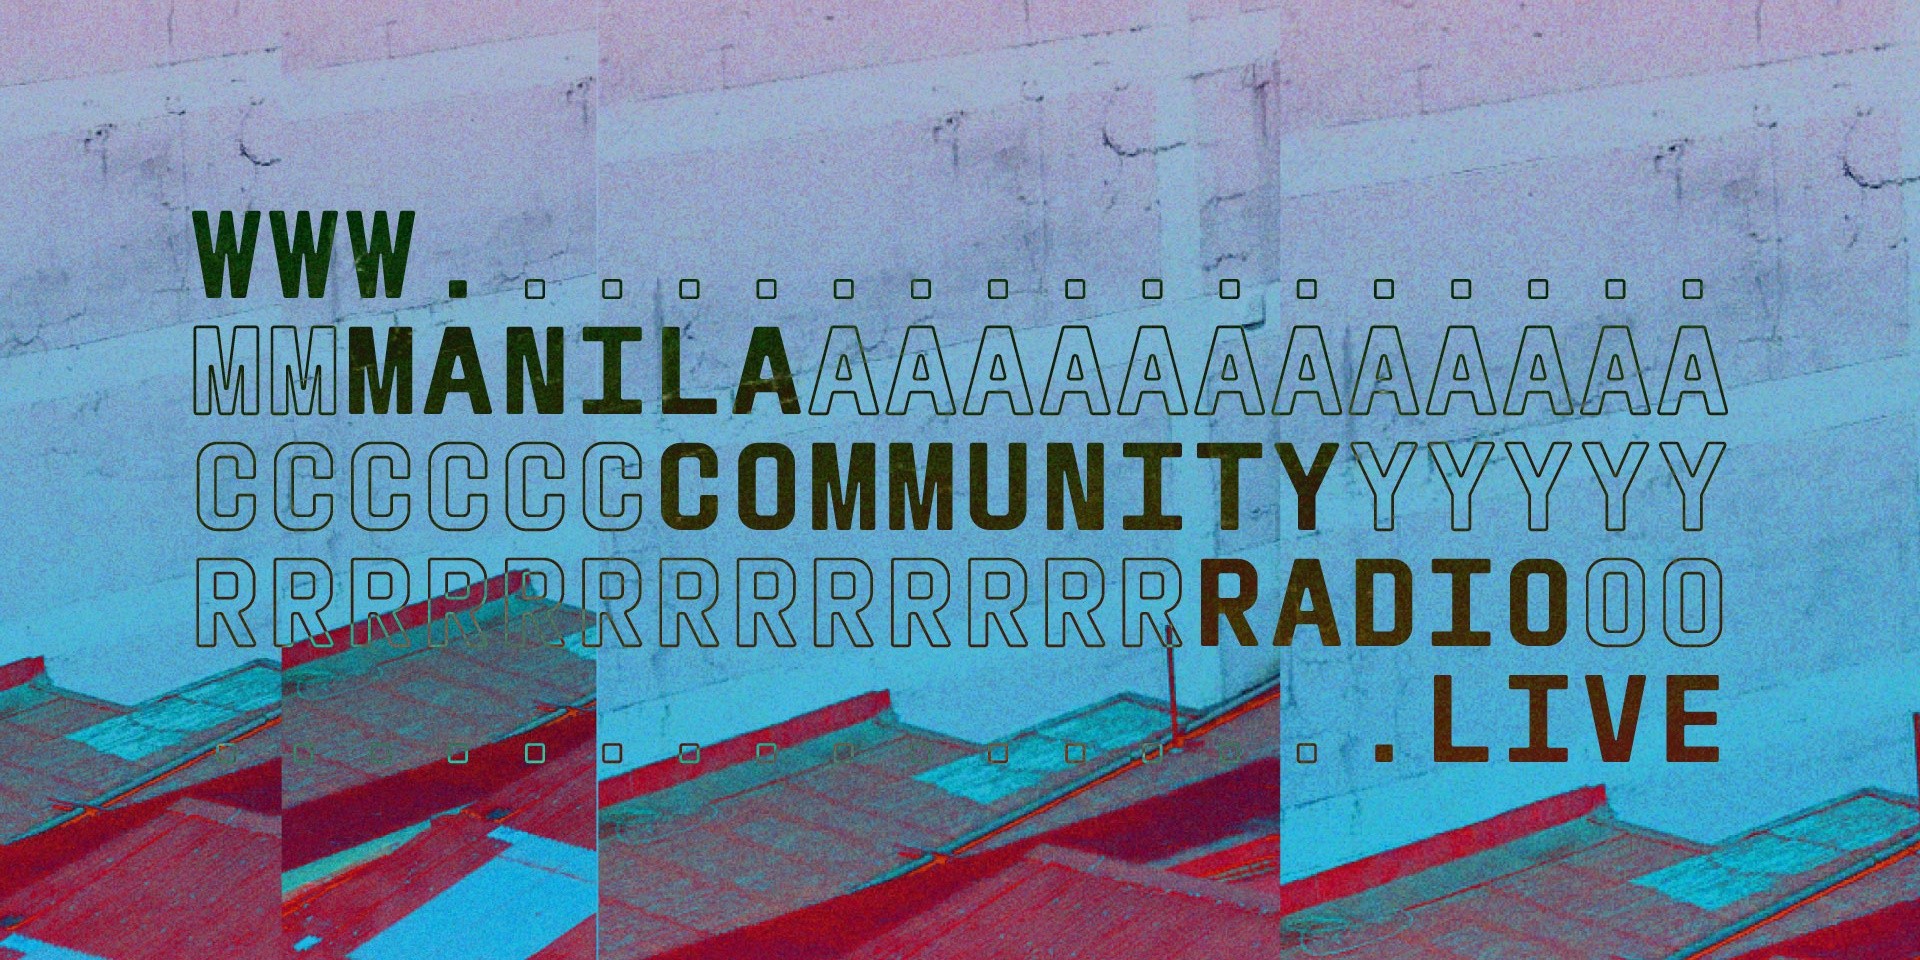 Manila Community Radio goes live with 15-hour stream